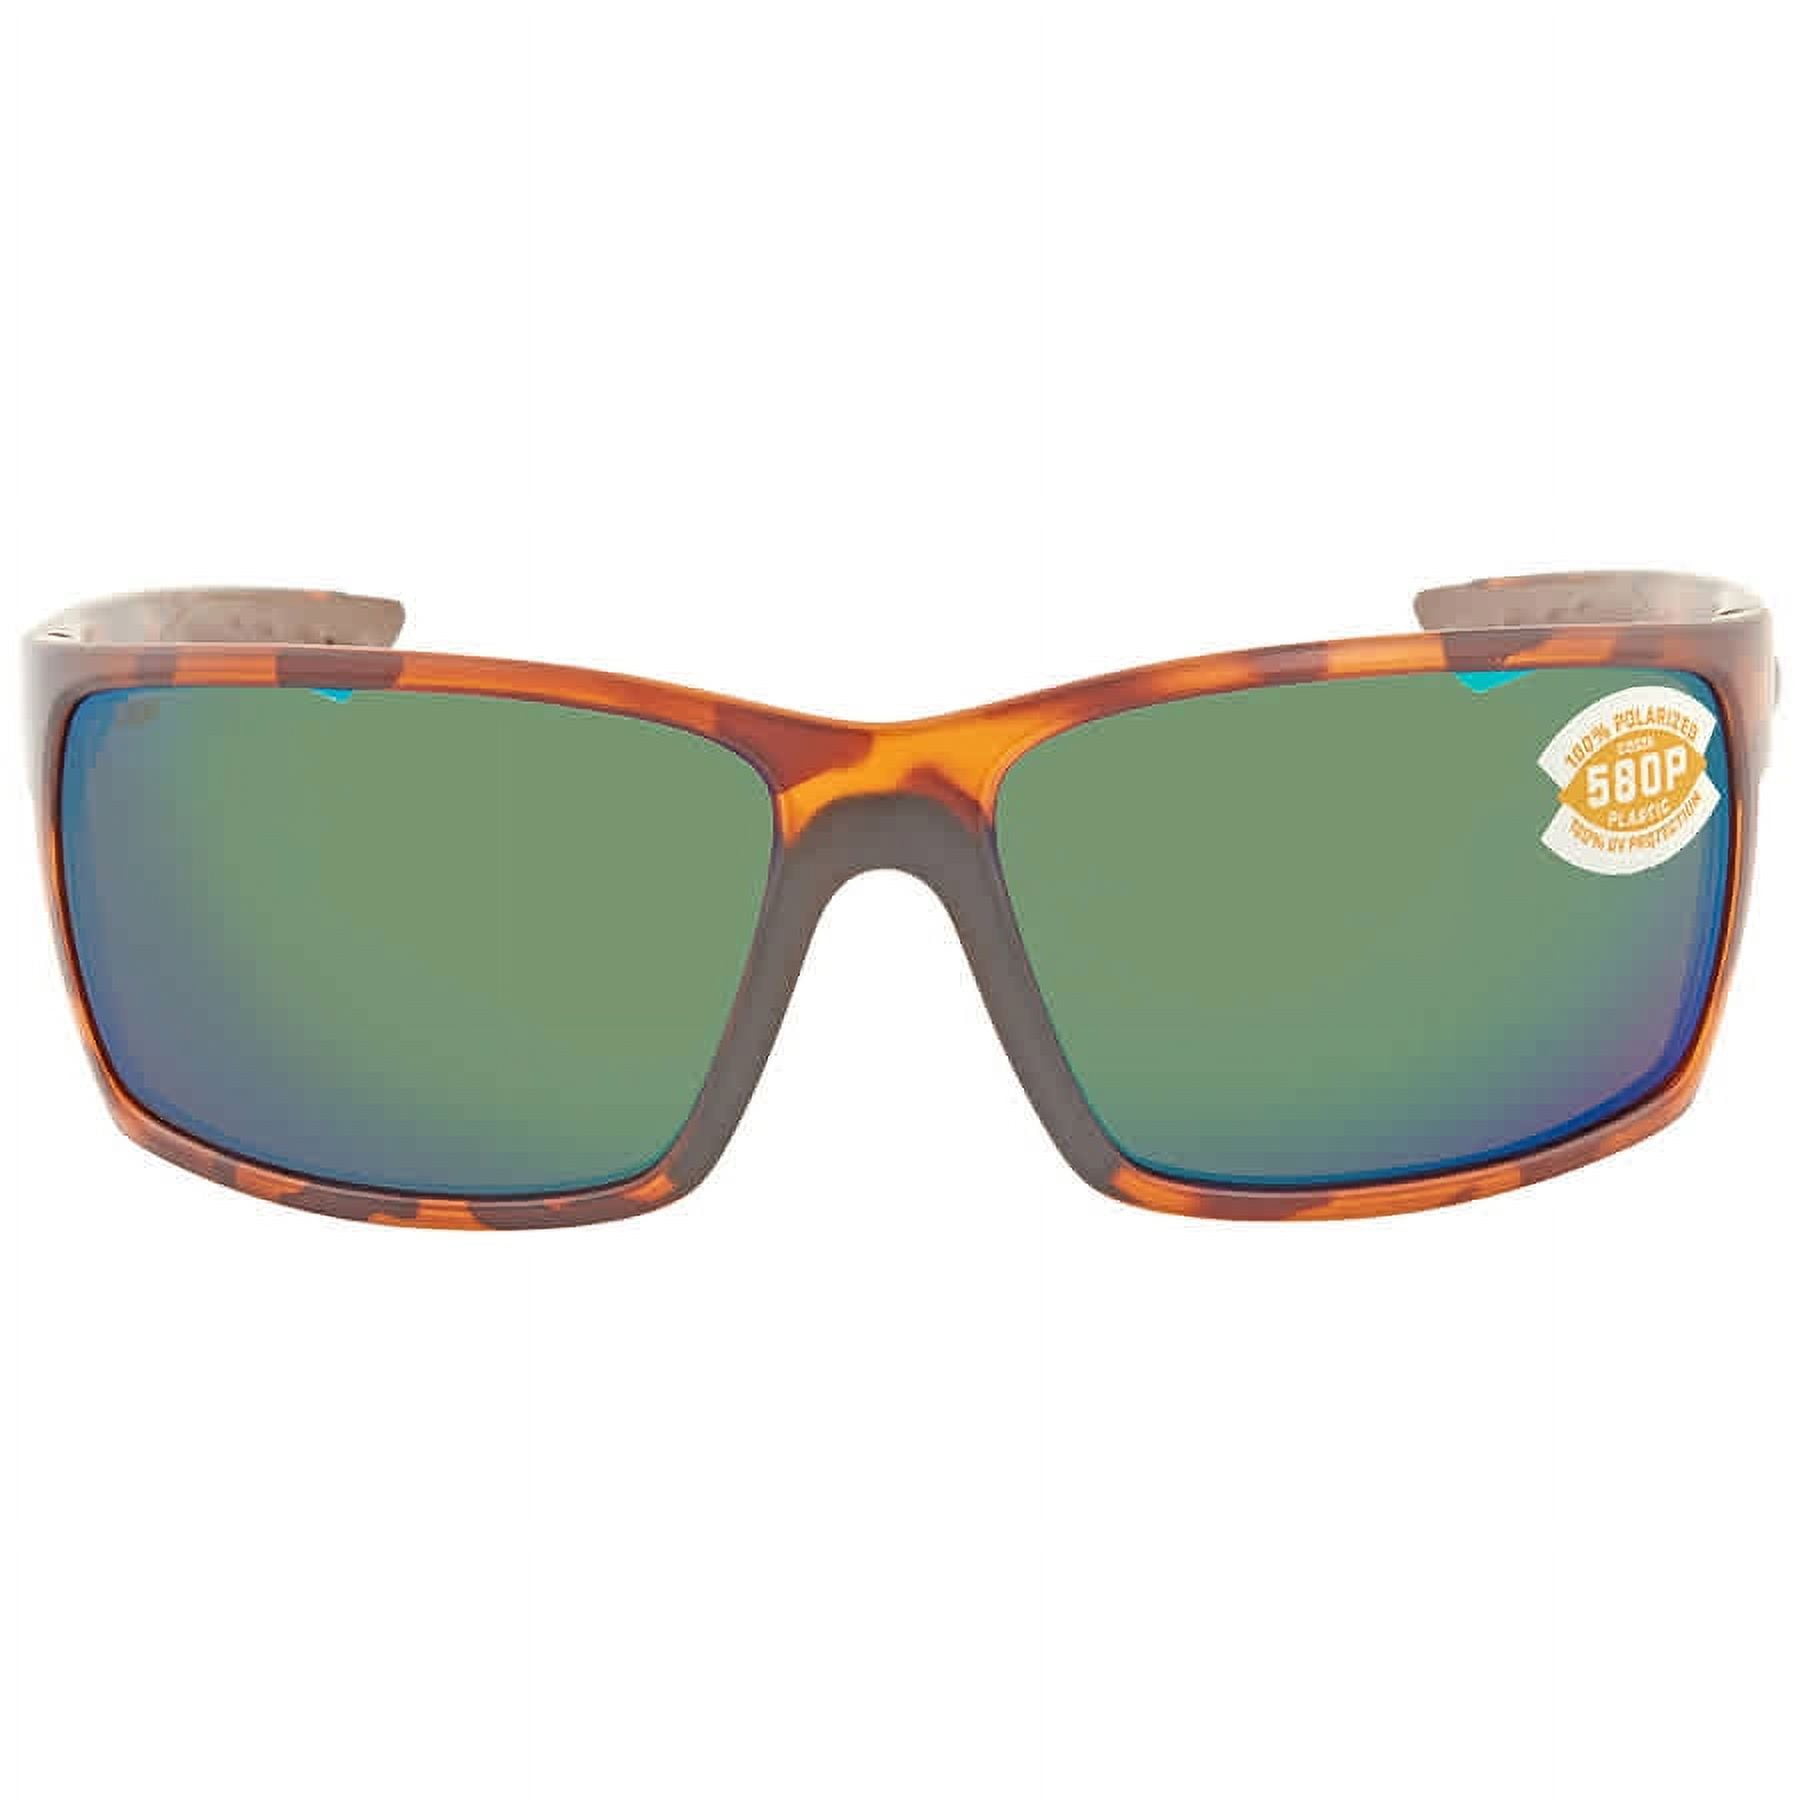 Costa Del Mar Men's Reefton Rectangular Sunglasses